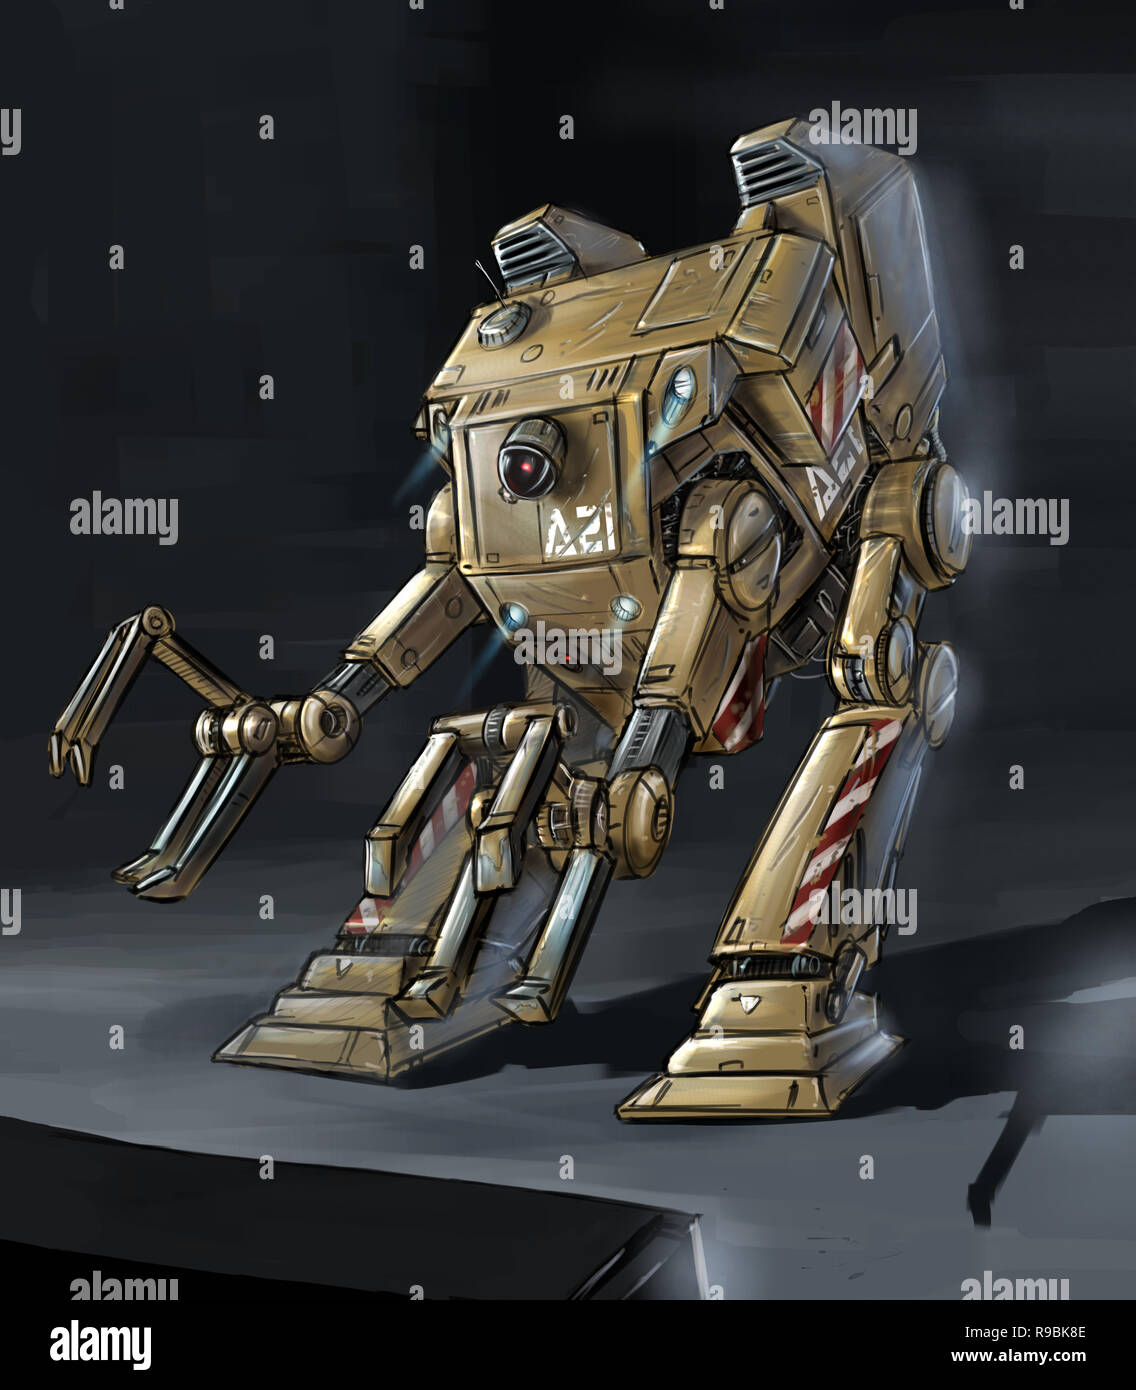 Concept Art Science Fiction Illustration of Robotic Loader or Robot Stock Photo